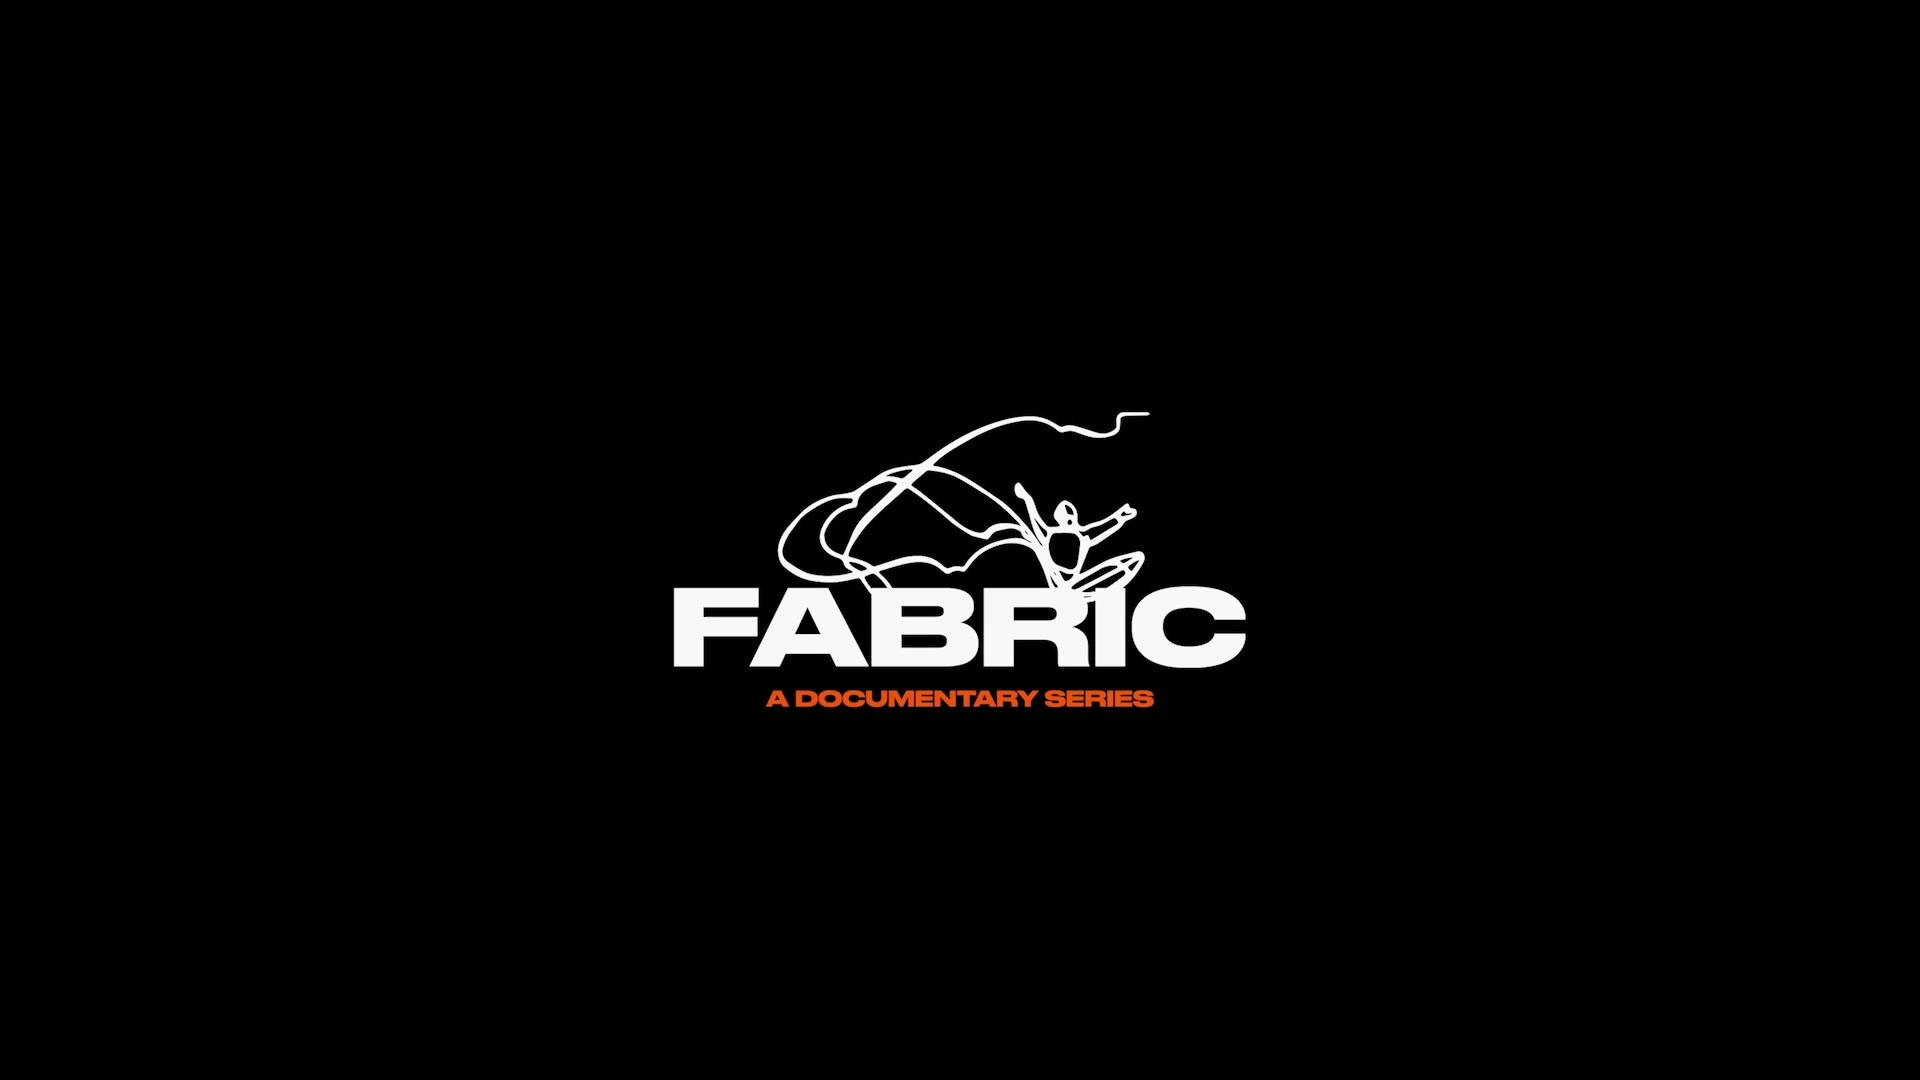 Fabric: A Documentary Series | Trailer